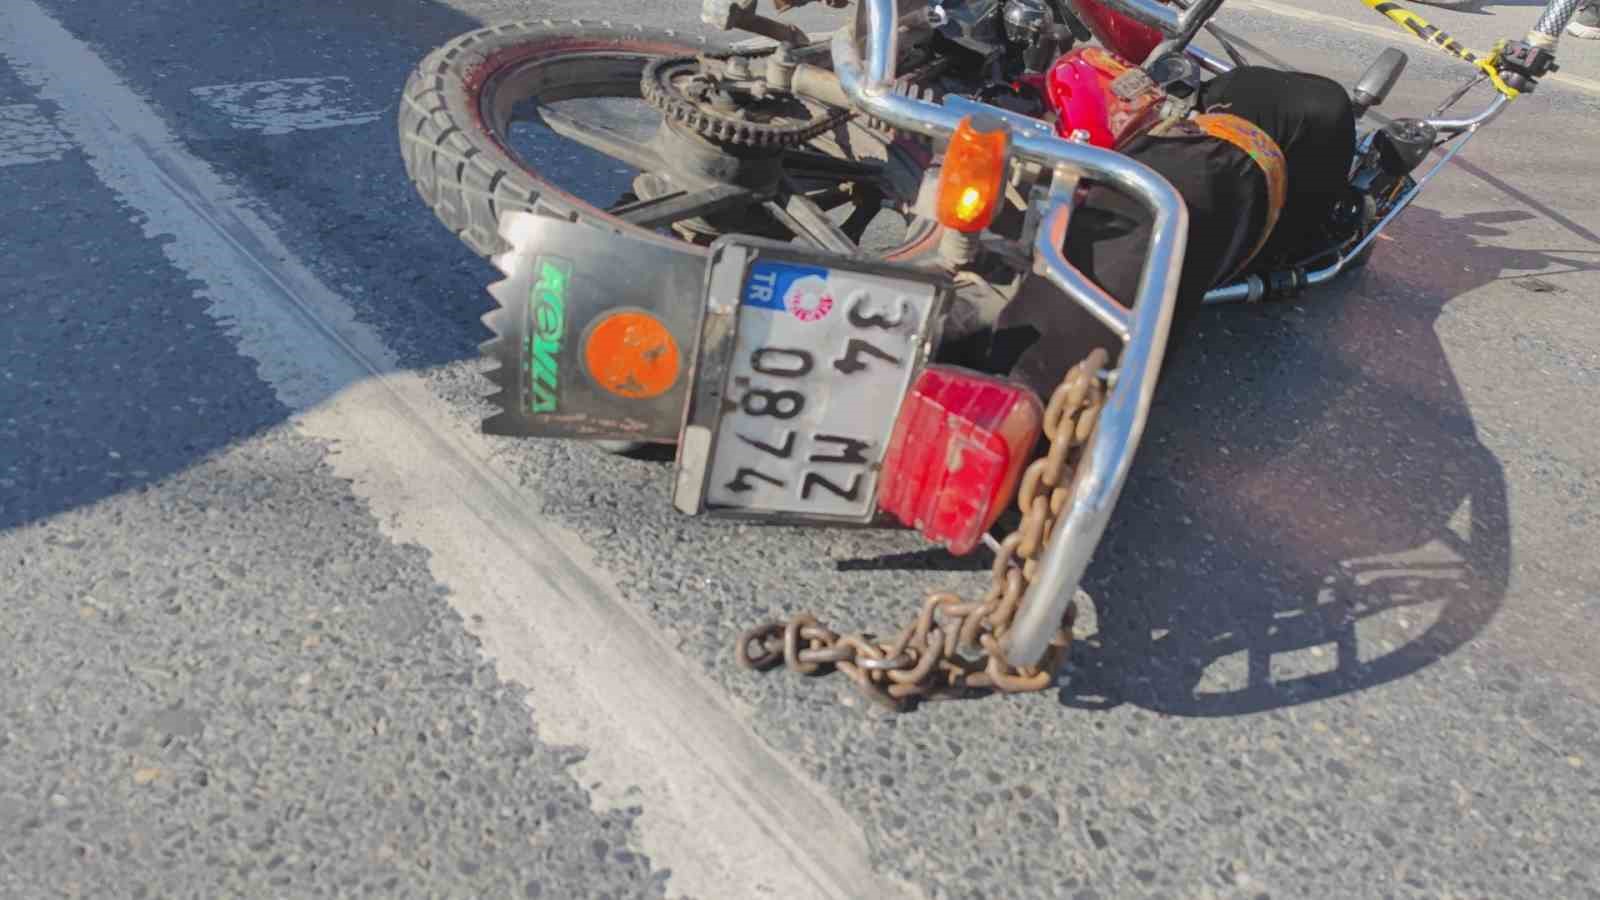 sultangazide duvar ile trafik uyari levhasi arasina sikisan motosikletli hayatini kaybetti 1 dg6h66TC